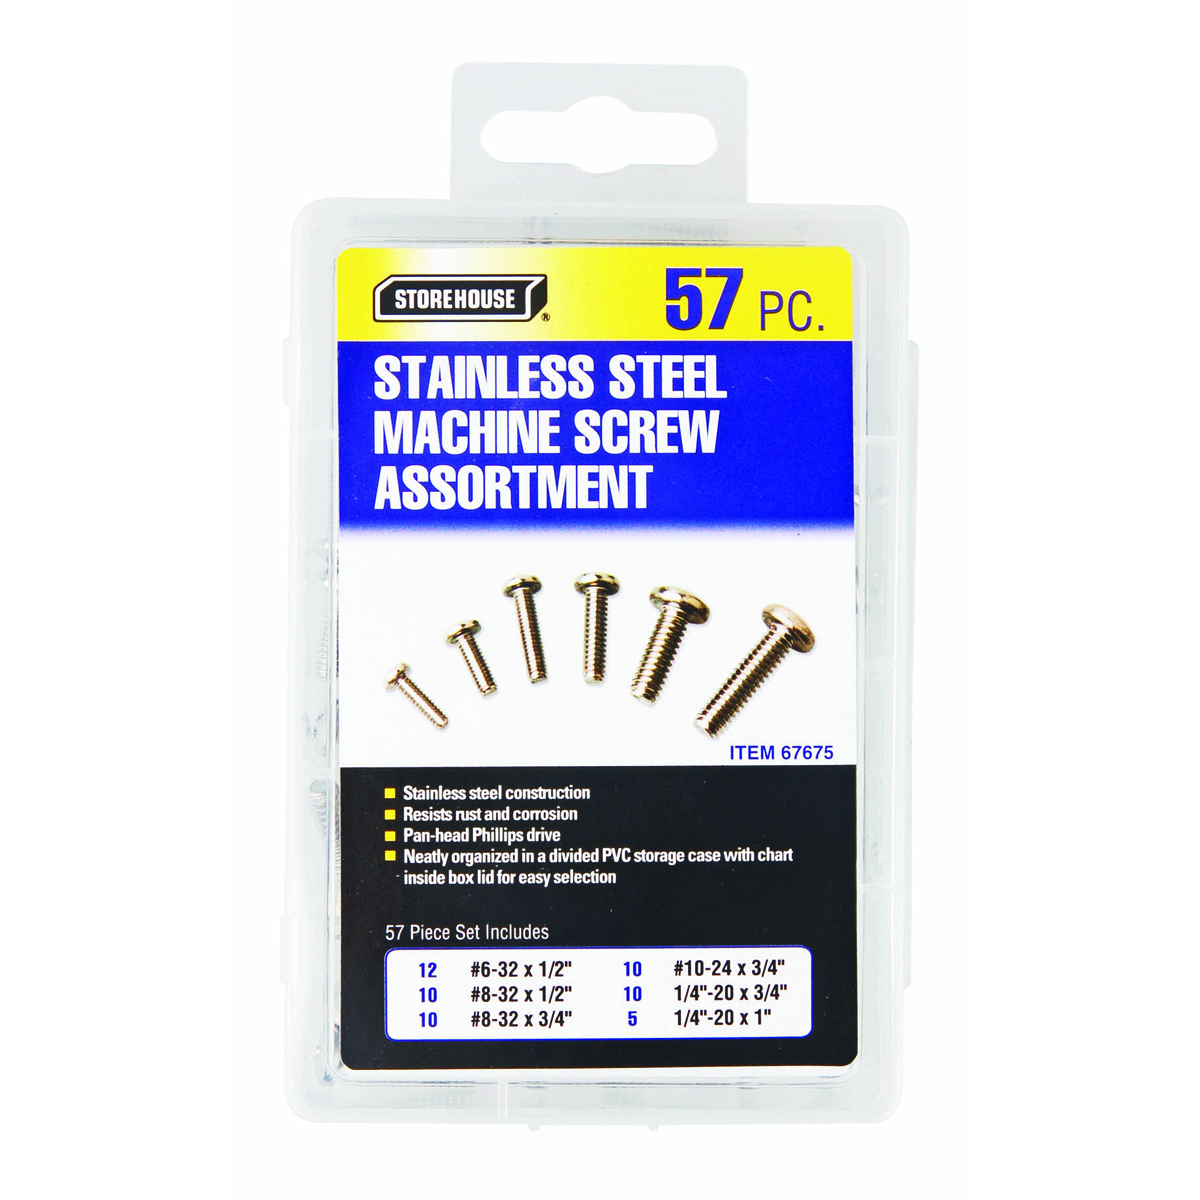 STOREHOUSE 57 Piece Stainless Steel Machine Screw Kit - Item 67675